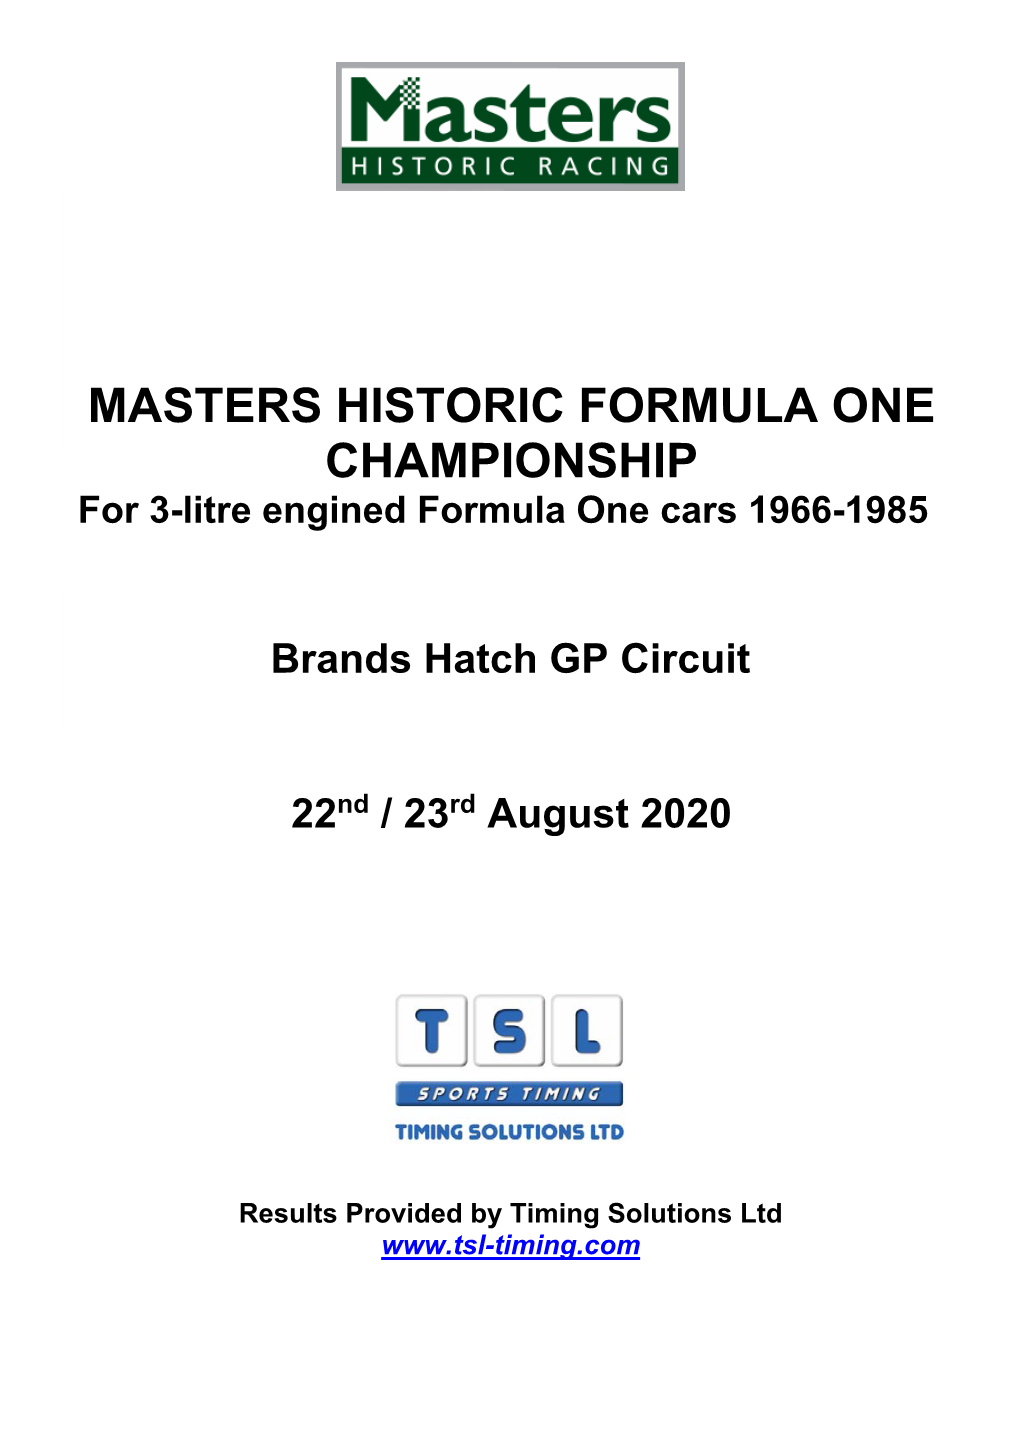 Masters Historic Formula One Championship